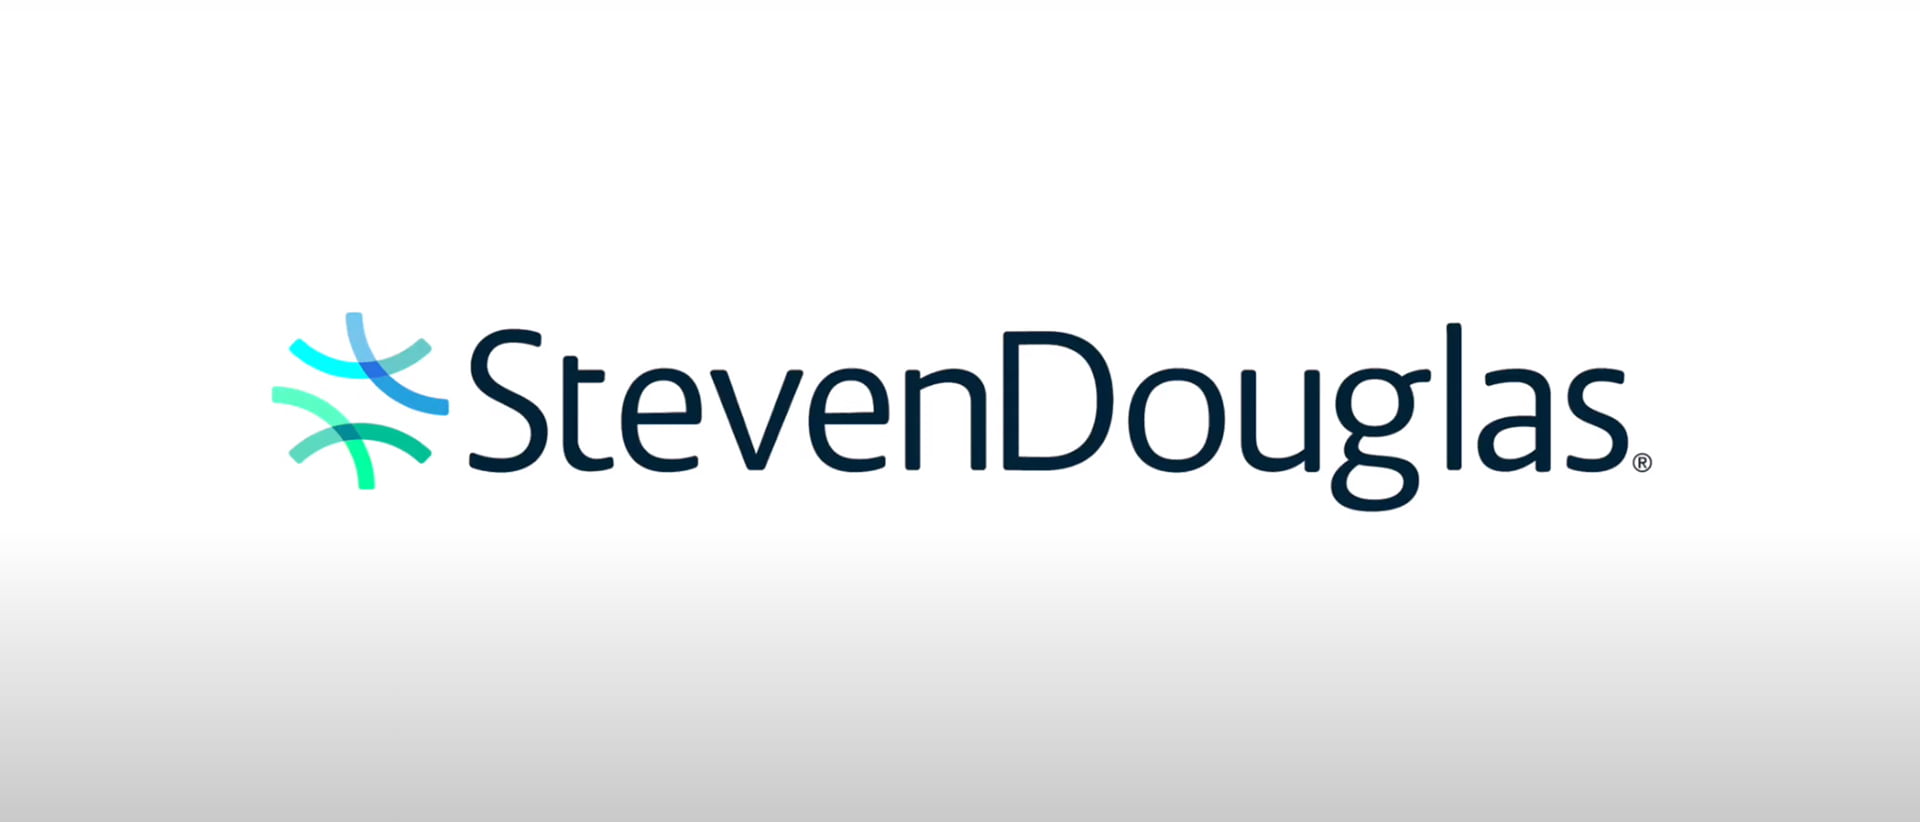 StevenDouglas Garnishes an Array of Awards, including Forbes Recognition